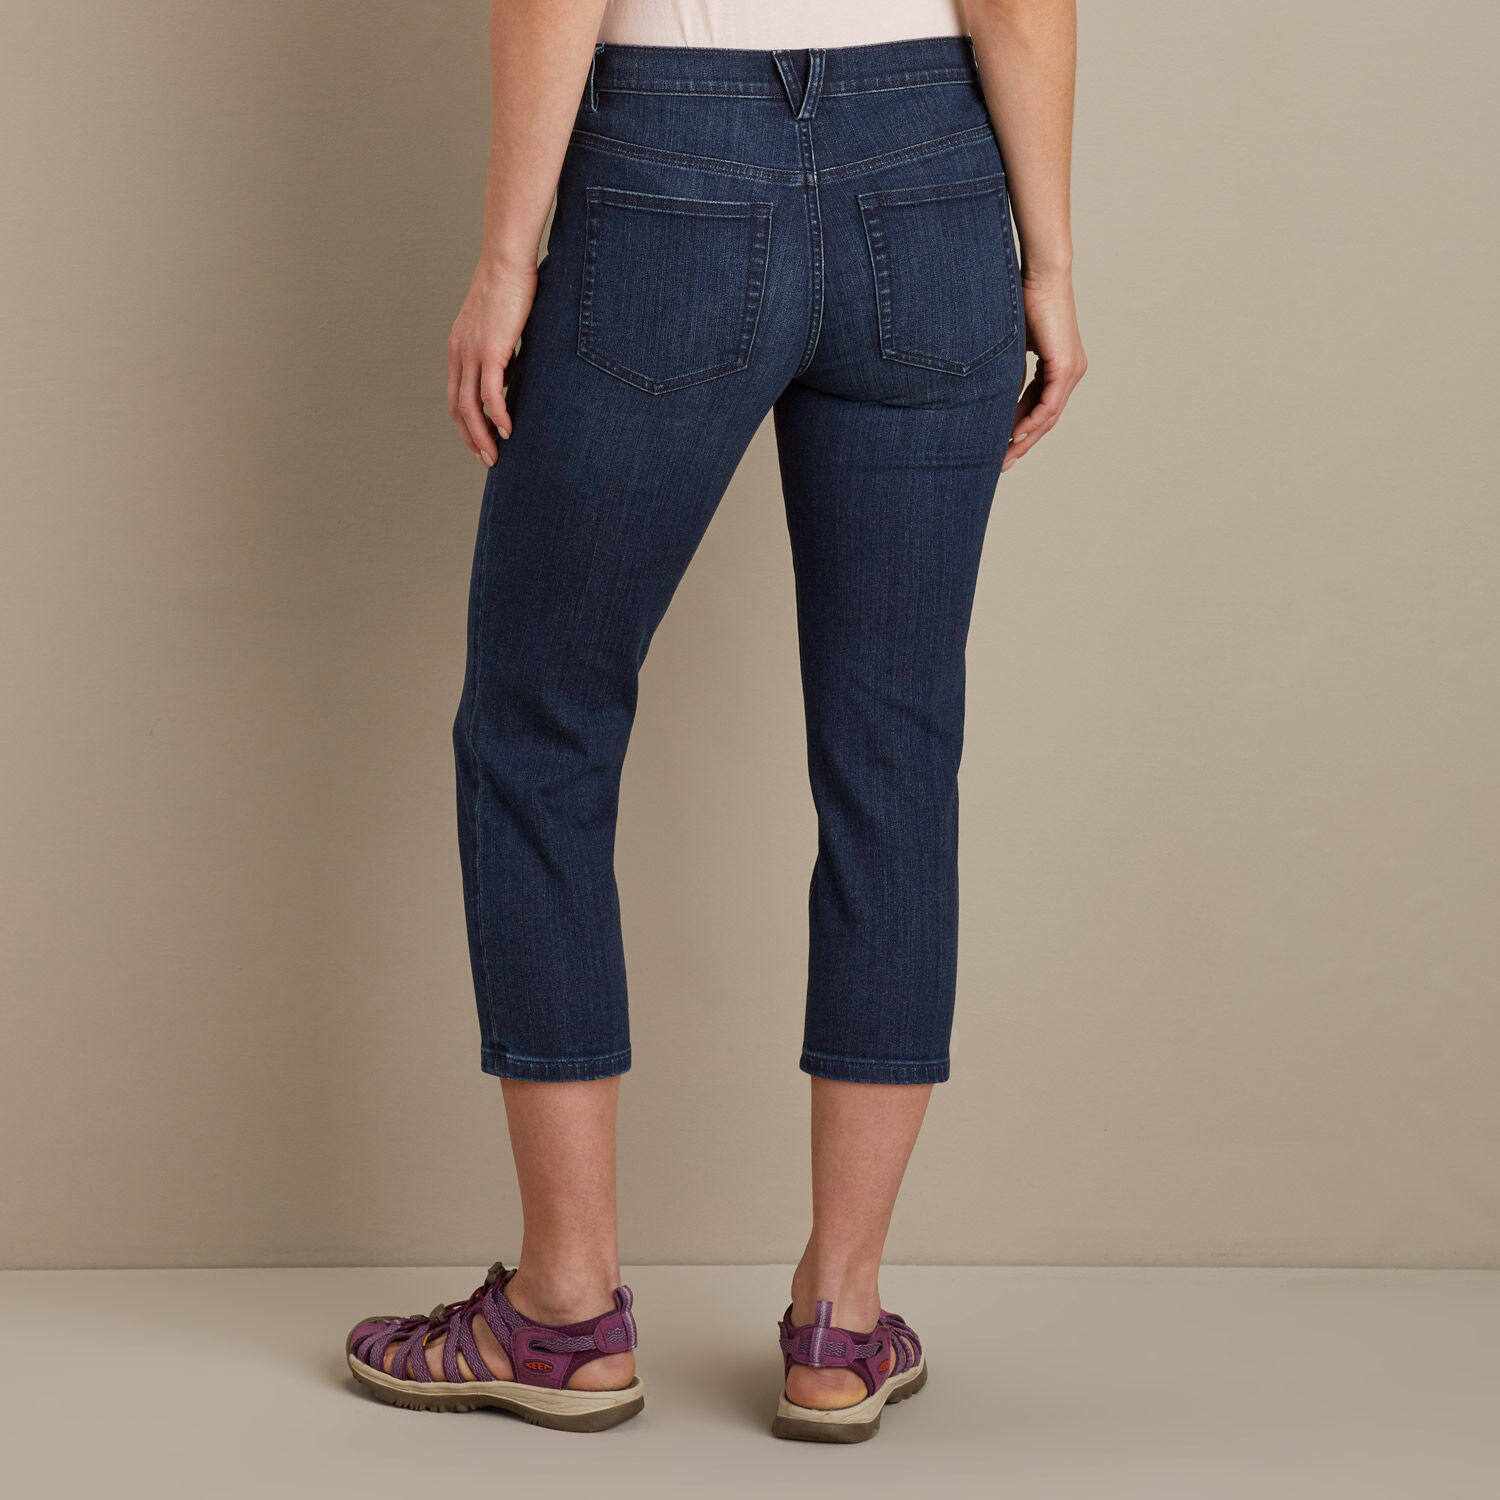 Mossimo Supply Co. Denim Capri Jeans for Women | Mercari